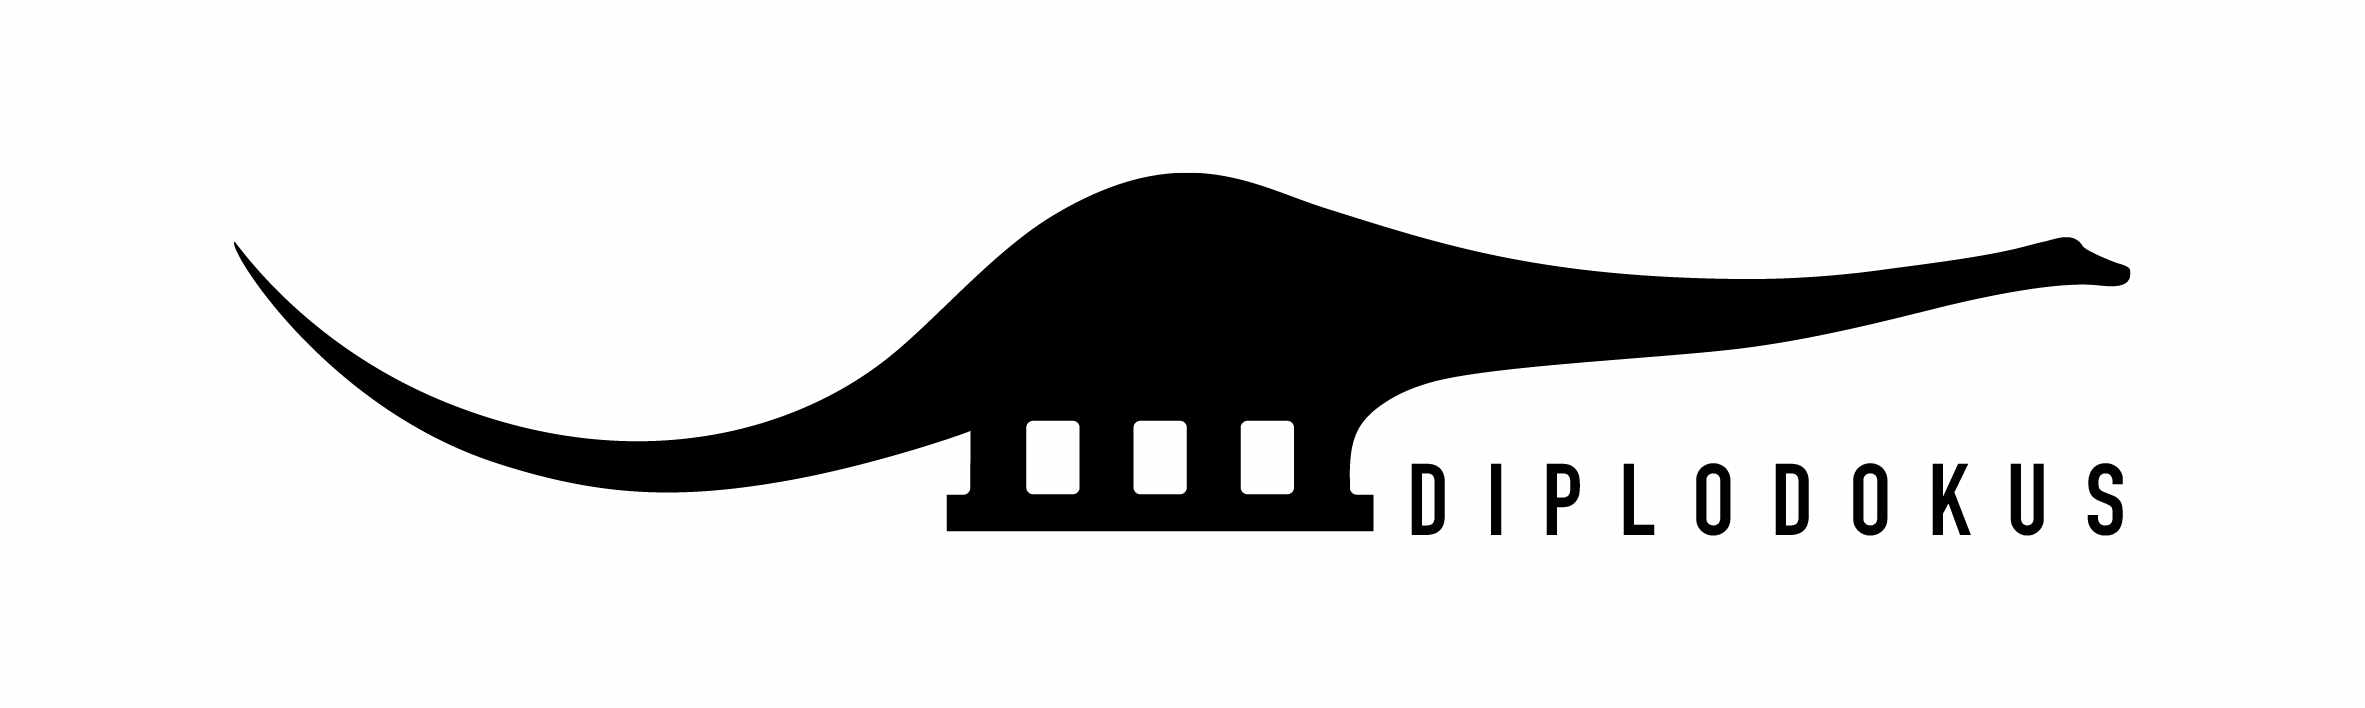 DIPLODOKUS_logo_black_mq.jpg